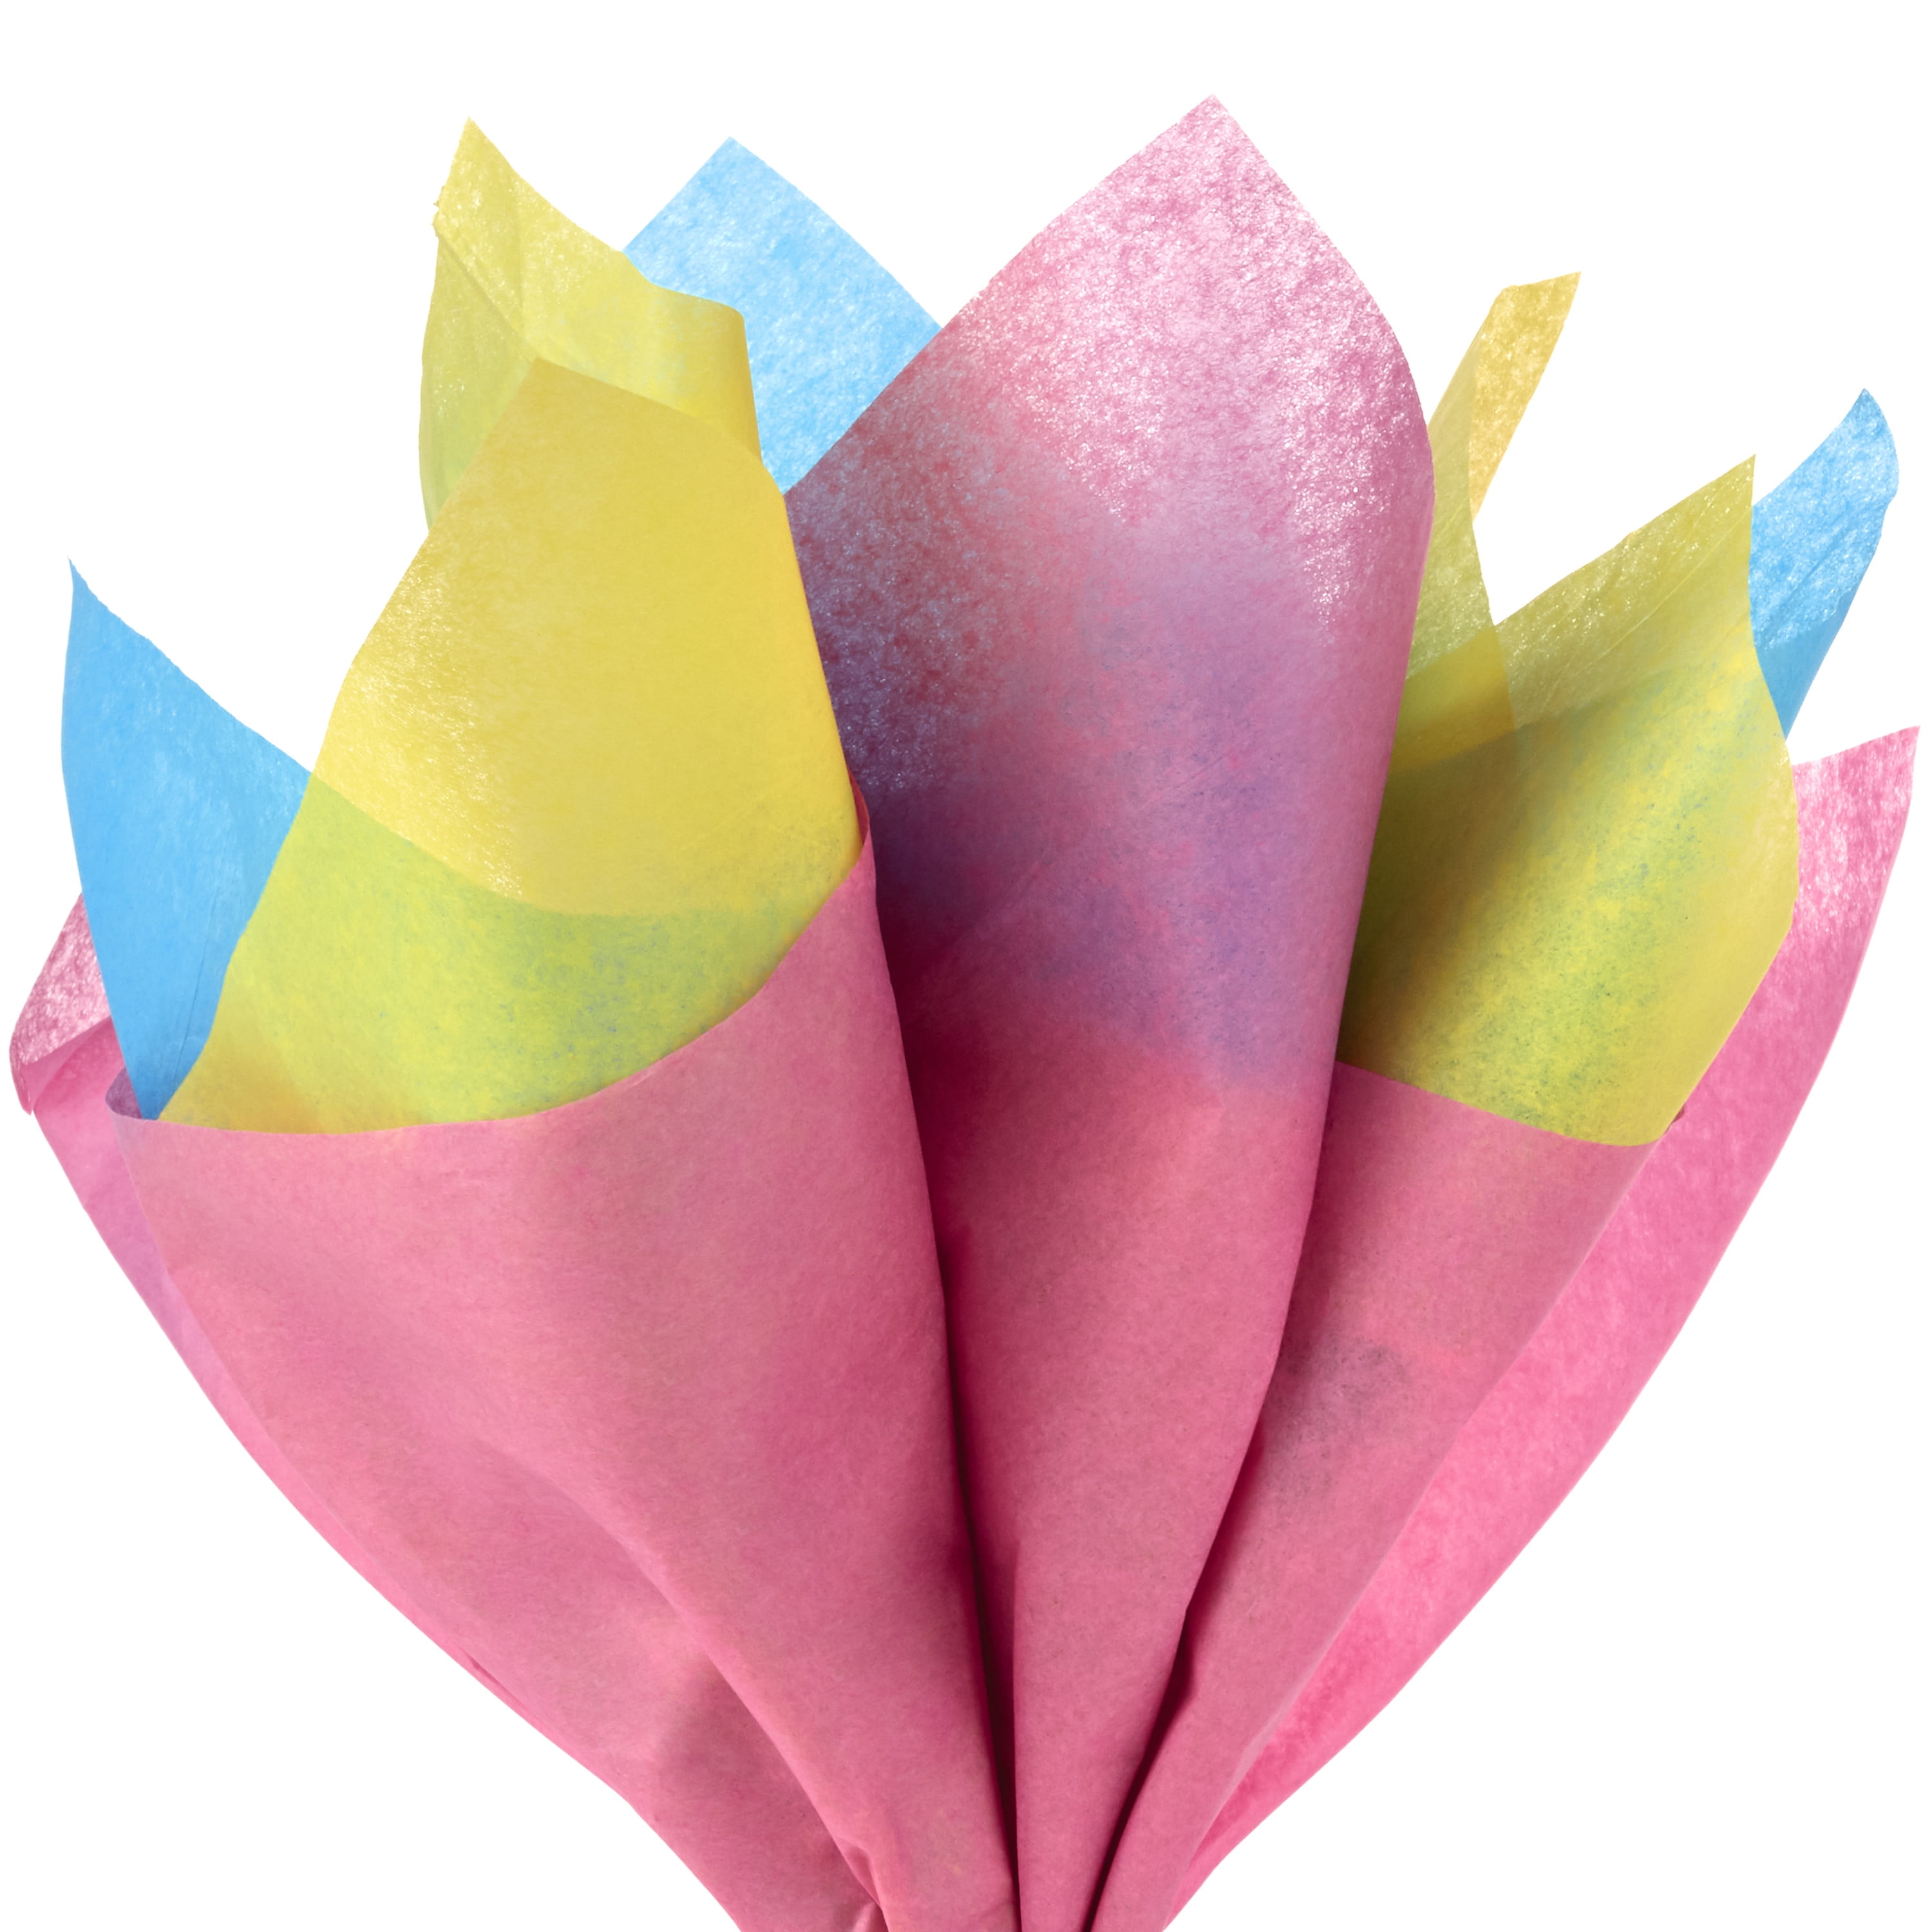 Hallmark Tissue Paper, 120 Sheets (Classic Rainbow, 8 Colors)